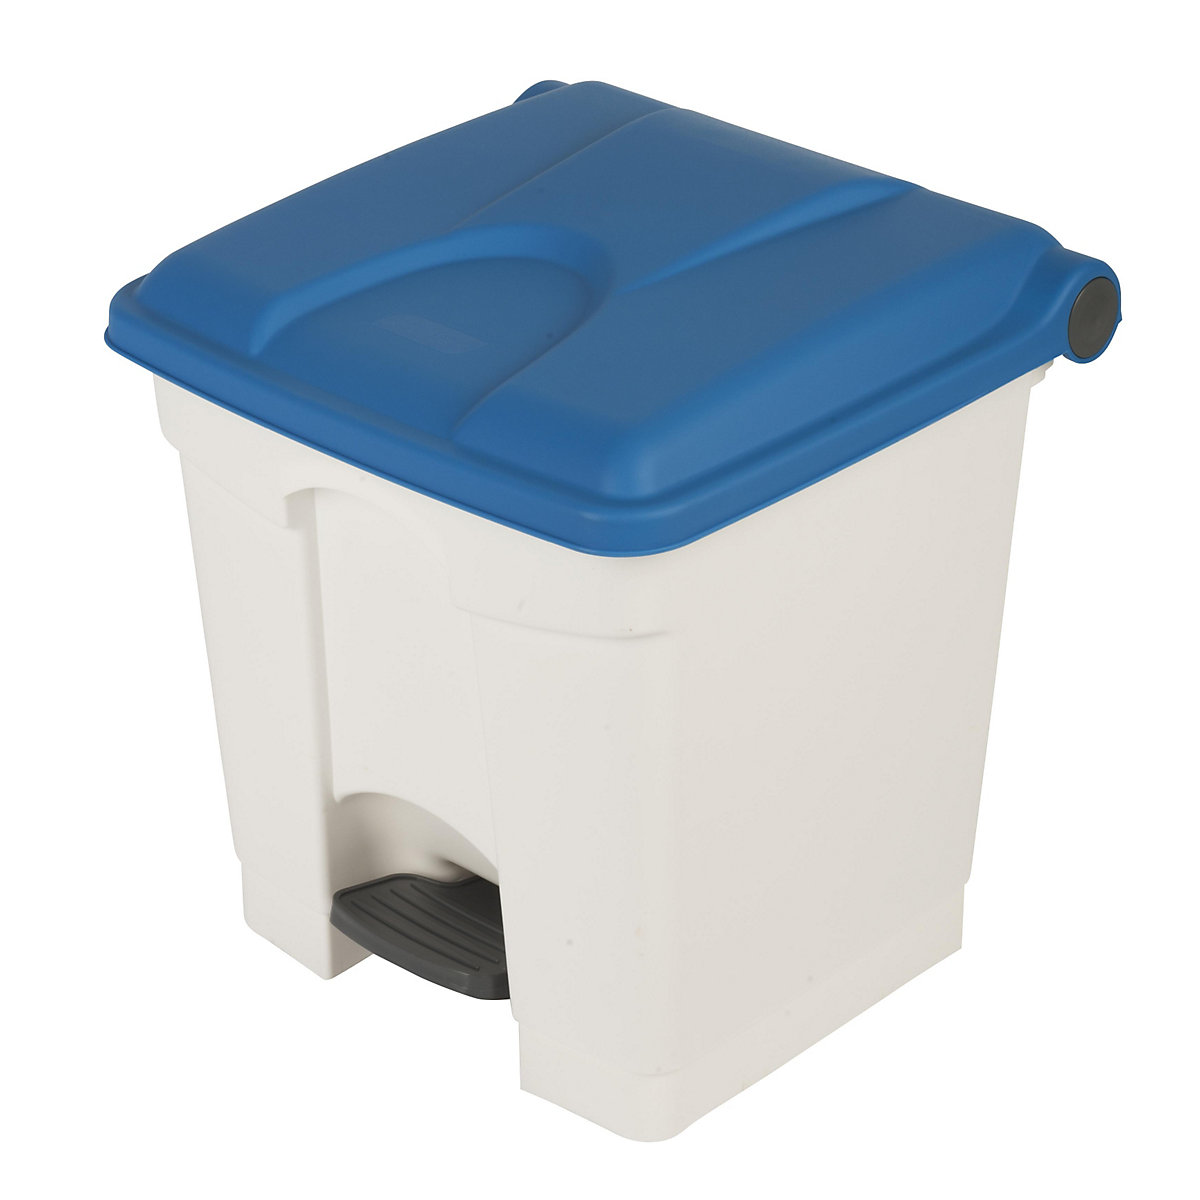 EUROKRAFTbasic – Pedal waste collector, capacity 30 l, WxHxD 410 x 435 x 400 mm, white, blue lid